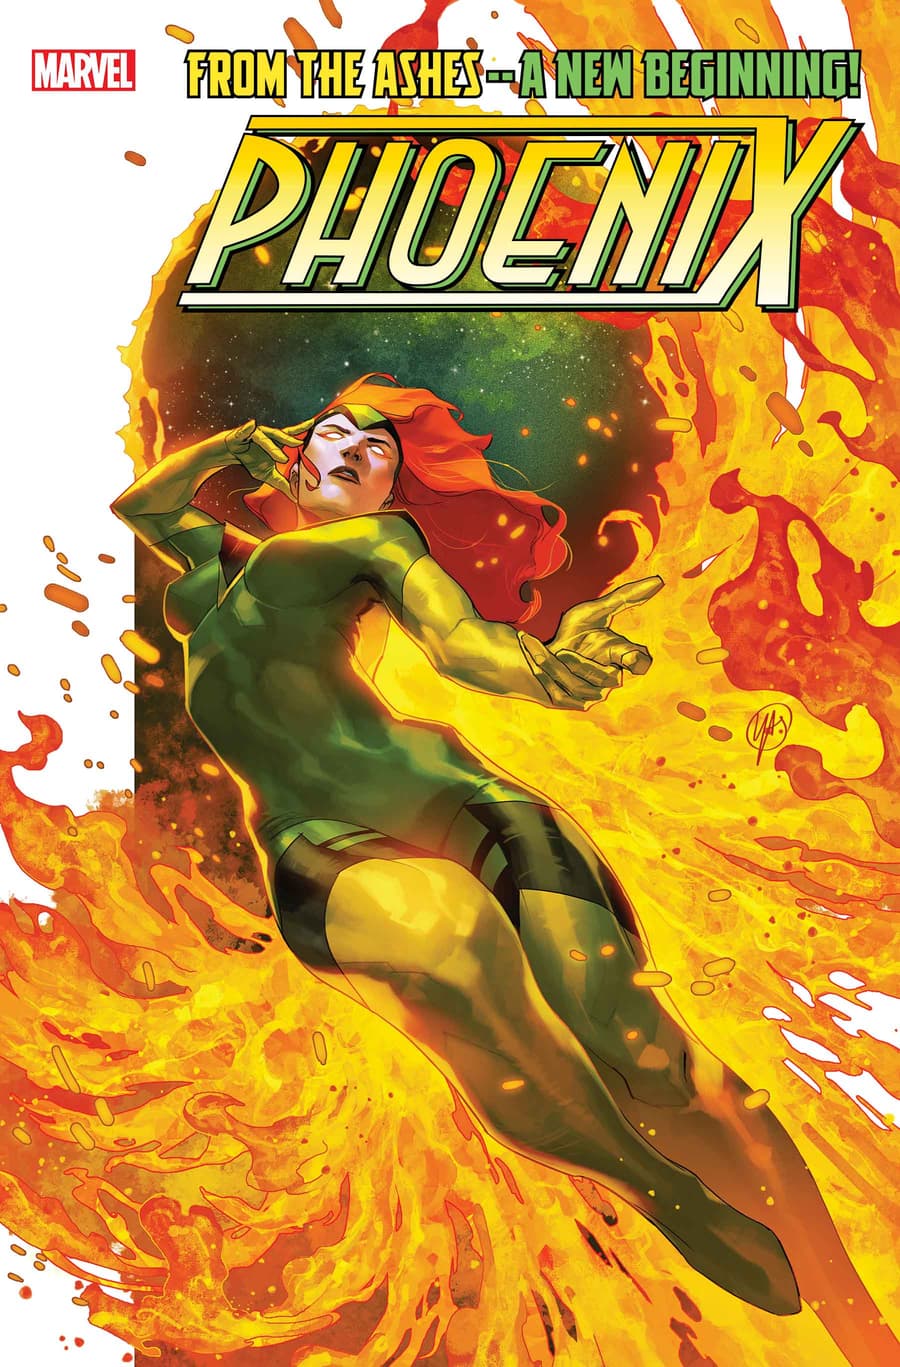 PHOENIX #1 cover by Yasmine Putri